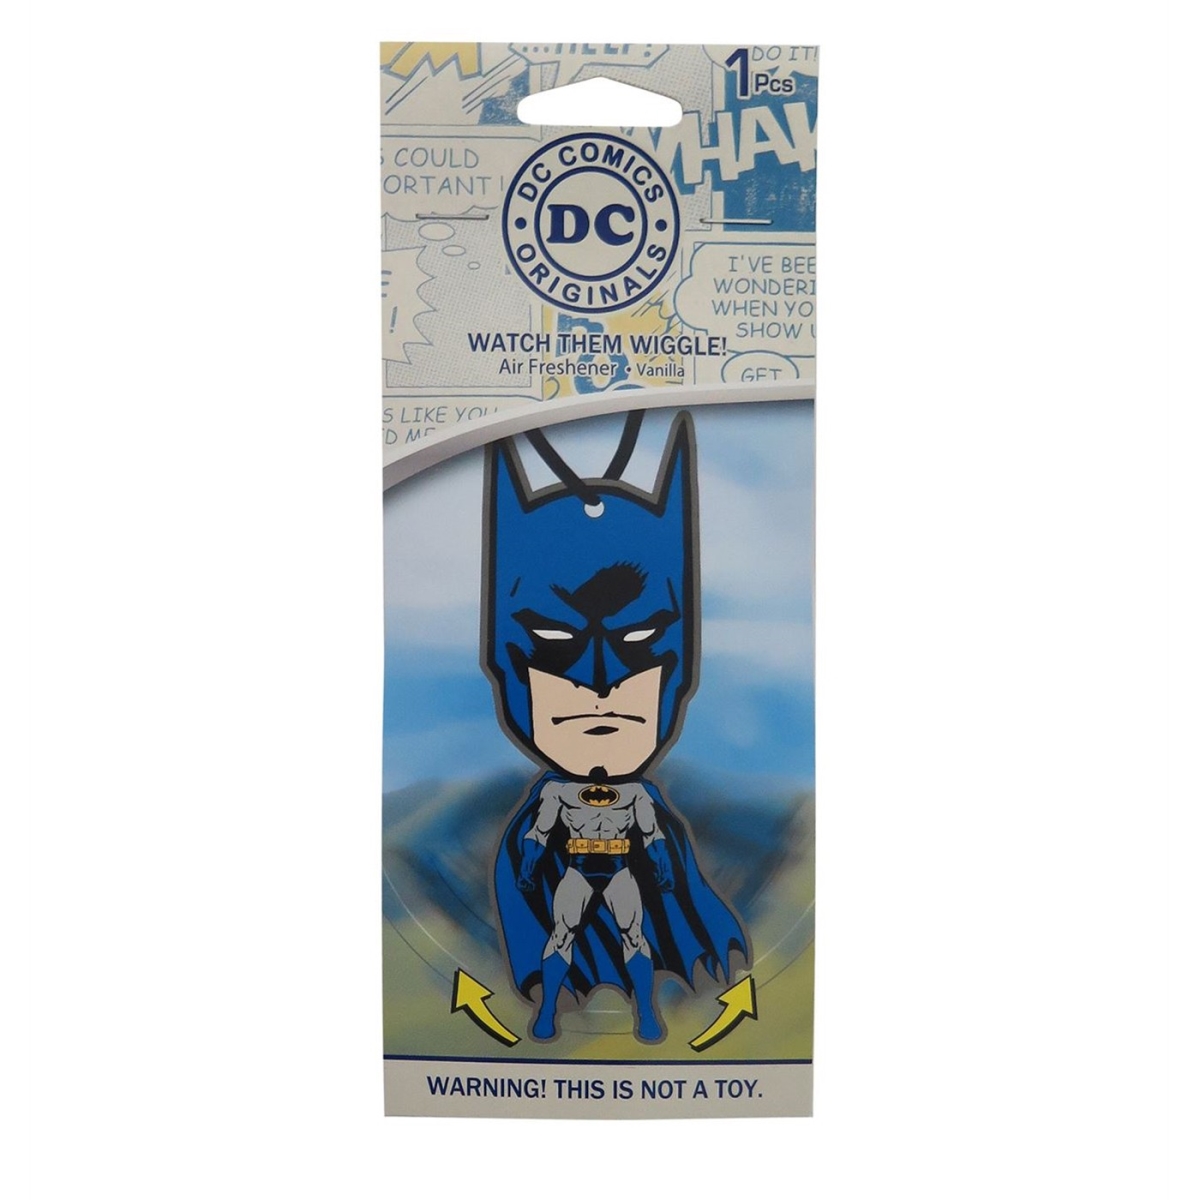 DC Comics airfreshbatwig Batman Wiggle Vanilla Air Freshener